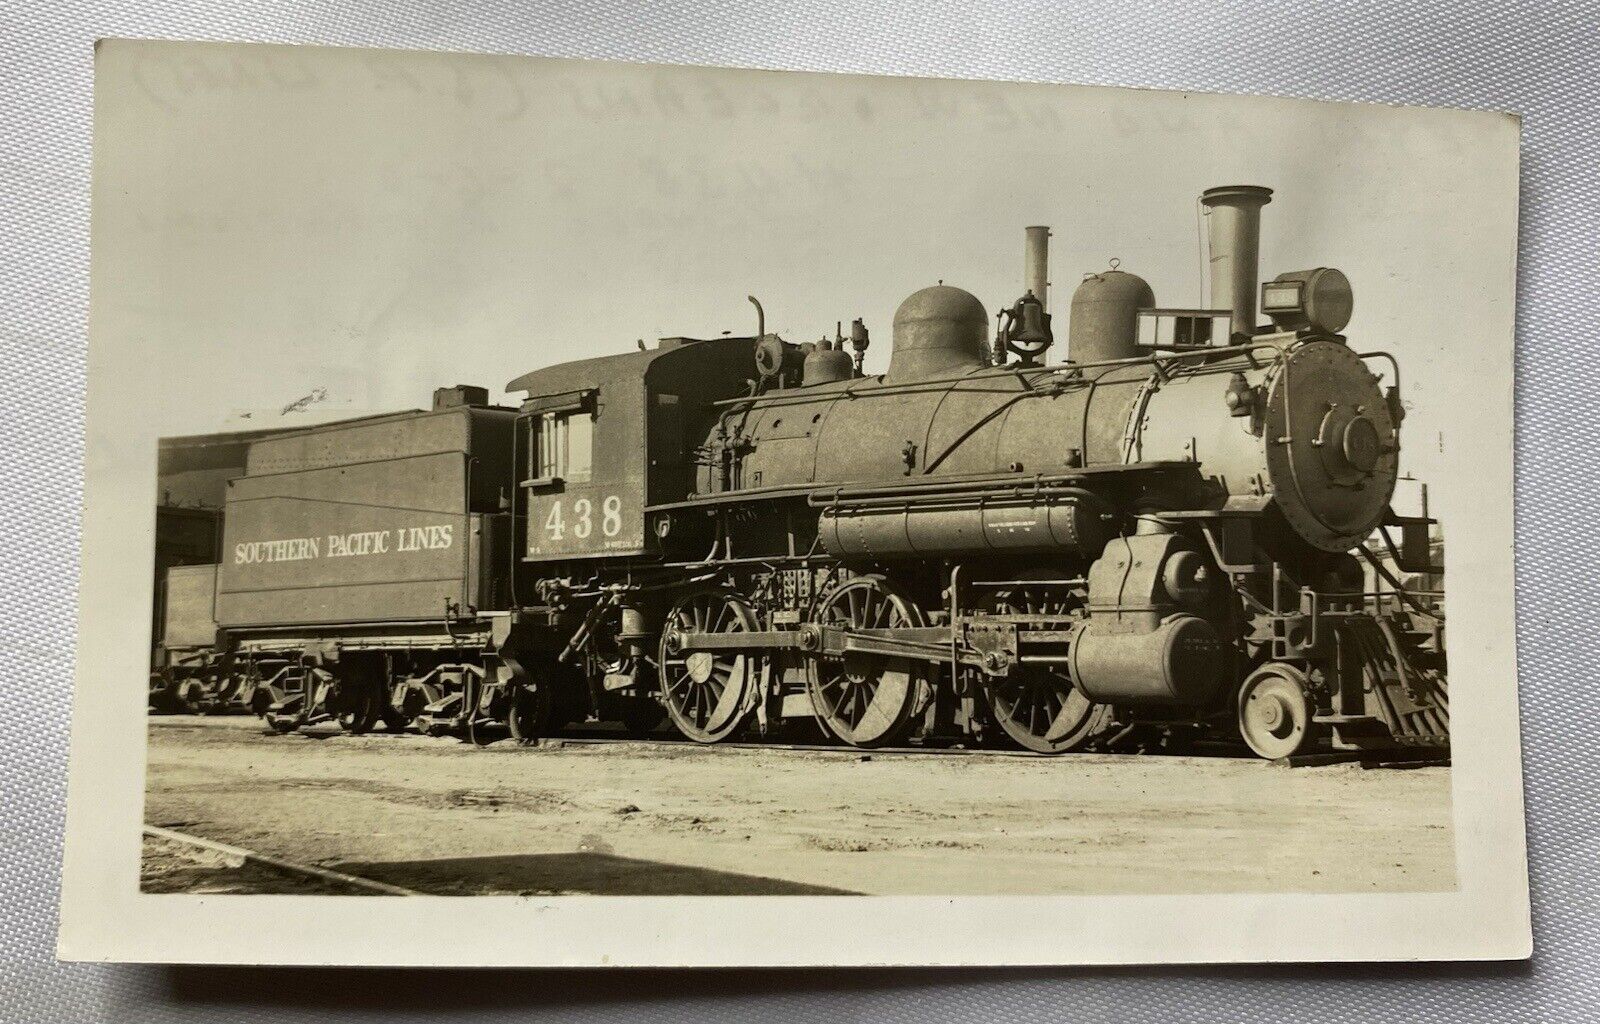 Vintage Photograph 1936 Locomotive Train 438 Southern Pacific Lines Ennis Texas